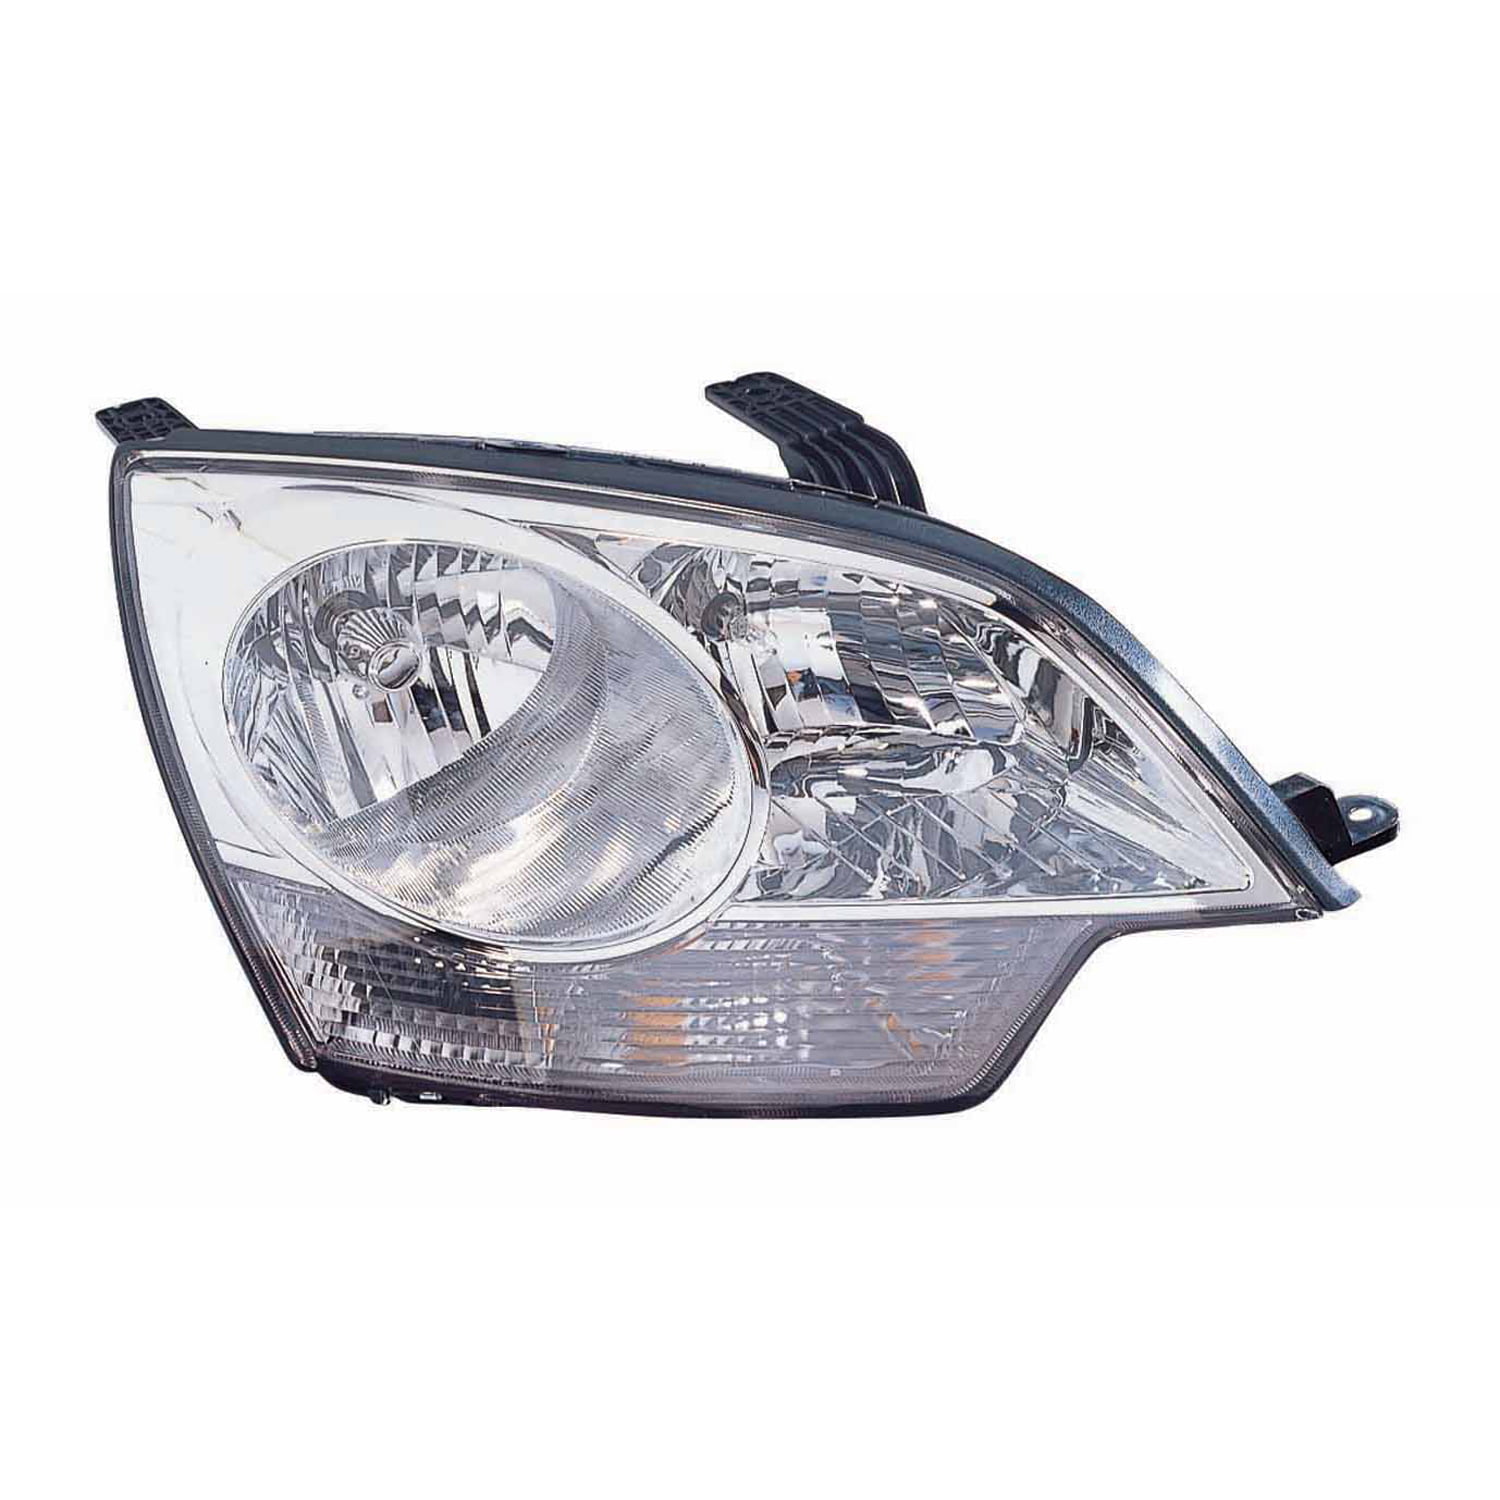 Headlight Headlamp Passenger Side Right RH for Saturn Vue Chevy Captiva Sport